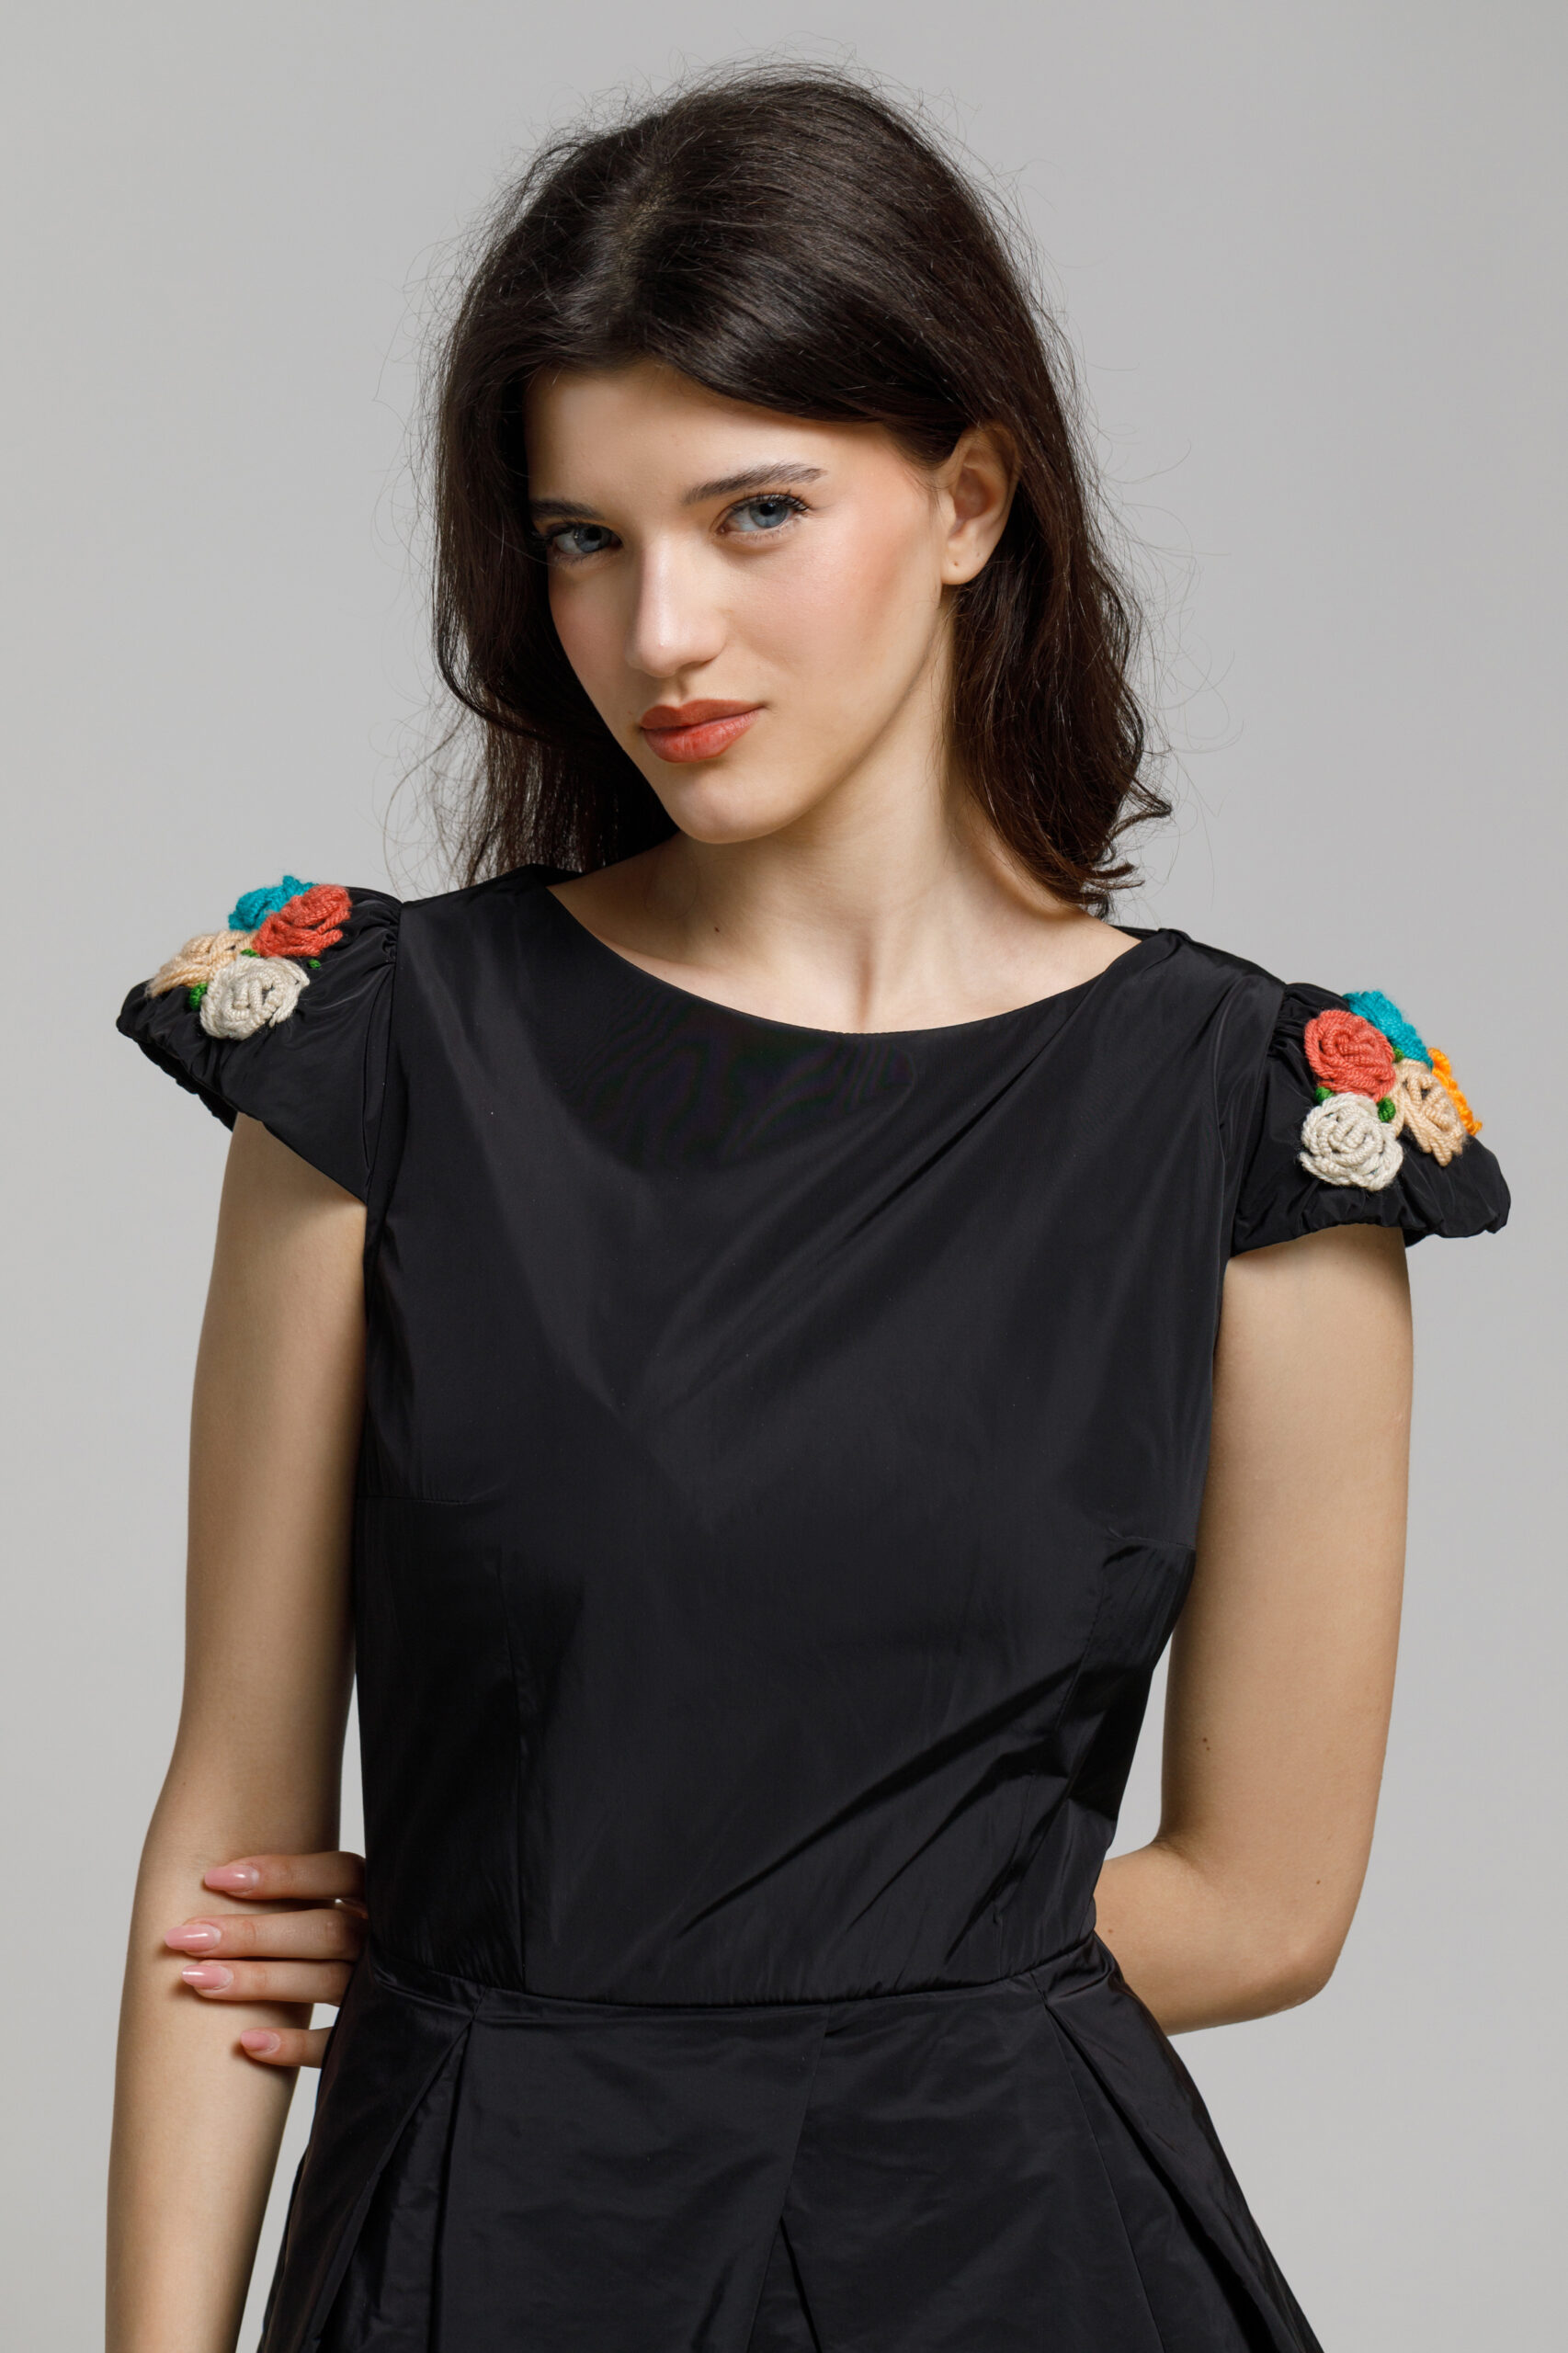 CHLOE black dress with embroidery. Natural fabrics, original design, handmade embroidery